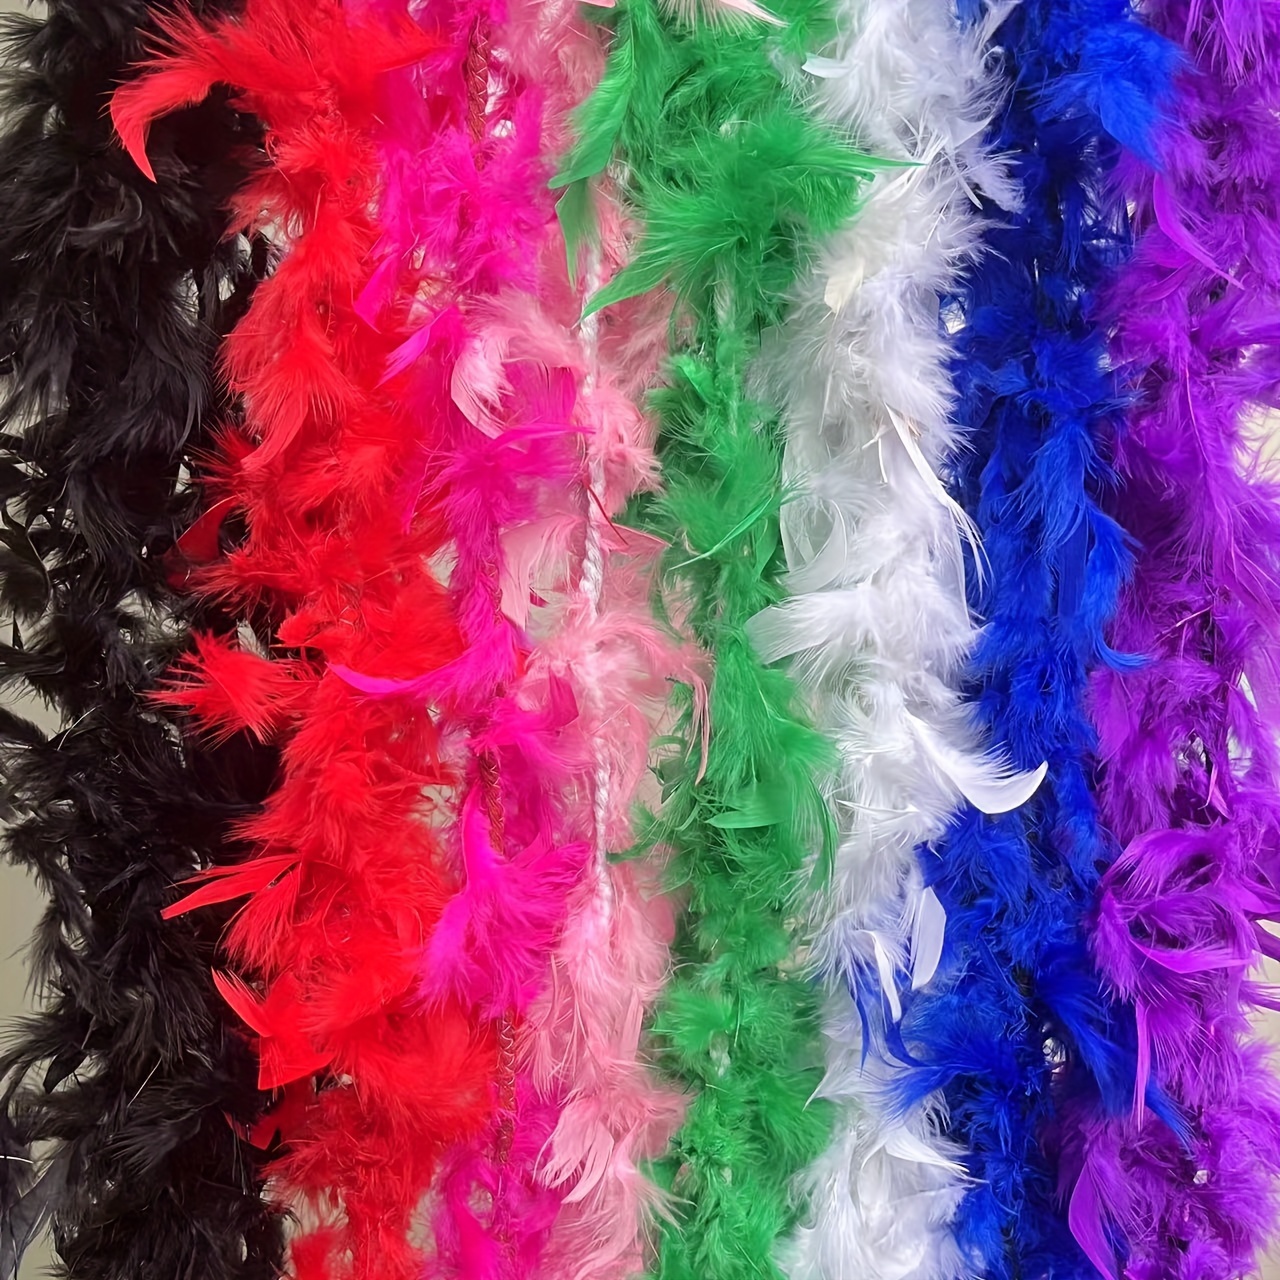 2 Yards 30g Fluffy Marabou Ostrich Feather Trim for DIY Craft Sewing Trim Home Wedding Party Decoration-Black